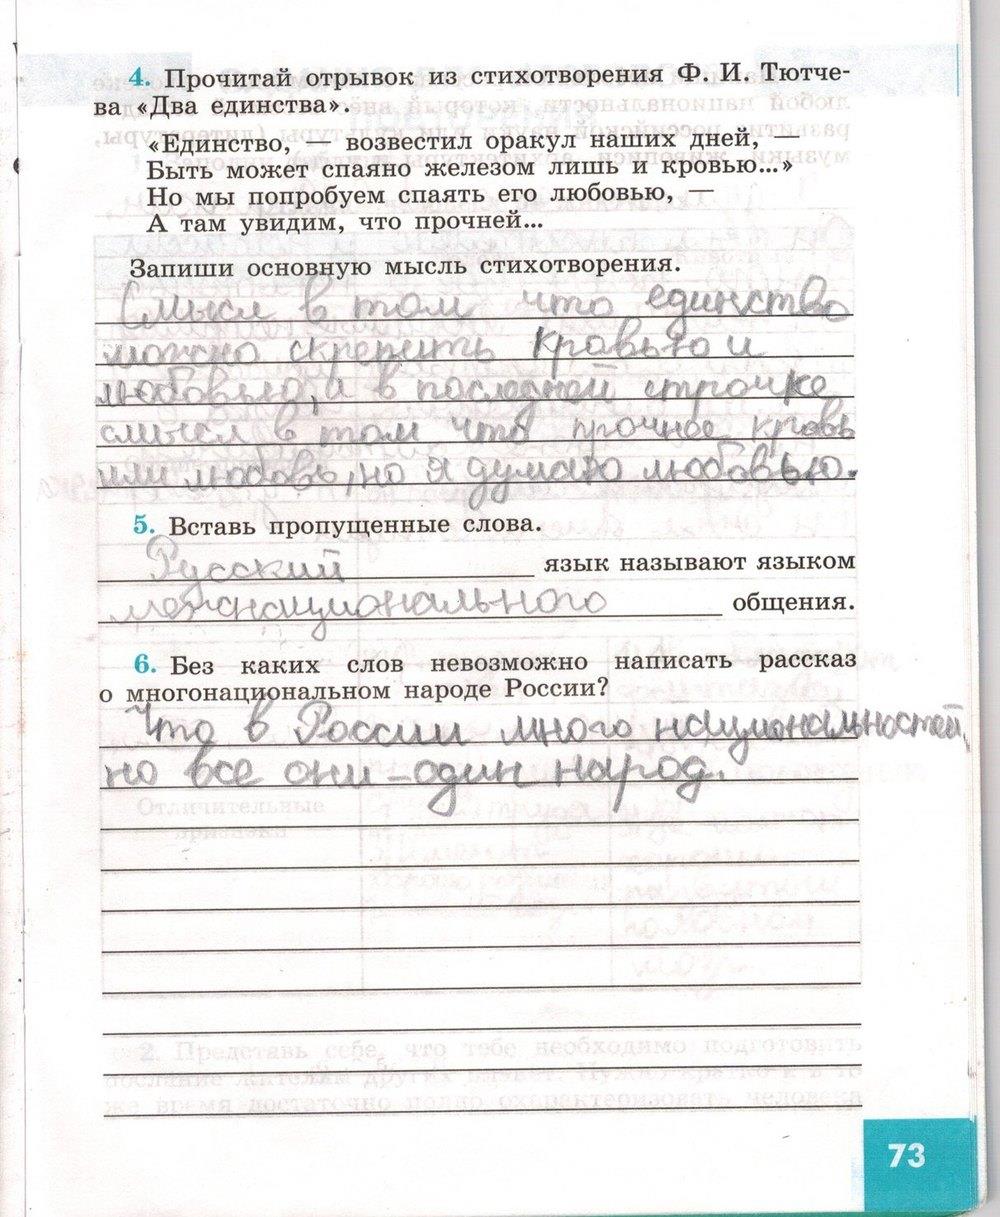 гдз 5 класс рабочая тетрадь страница 73 обществознание Иванова, Хотеенкова